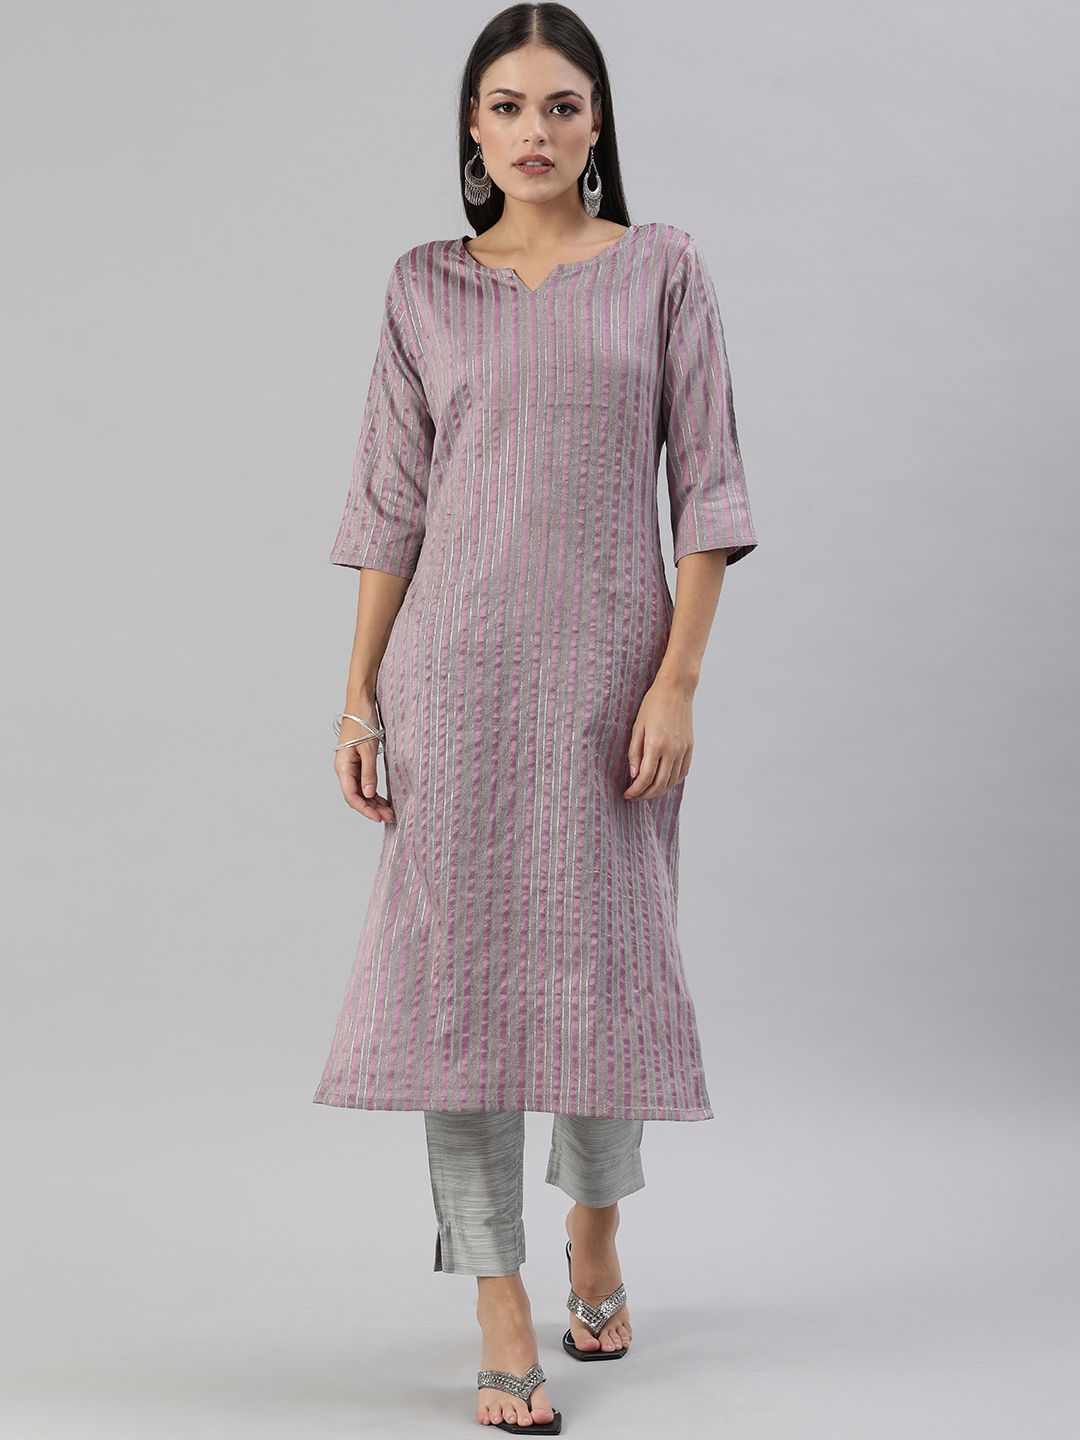 KALINI Lavender & Grey Striped Kurti Price in India